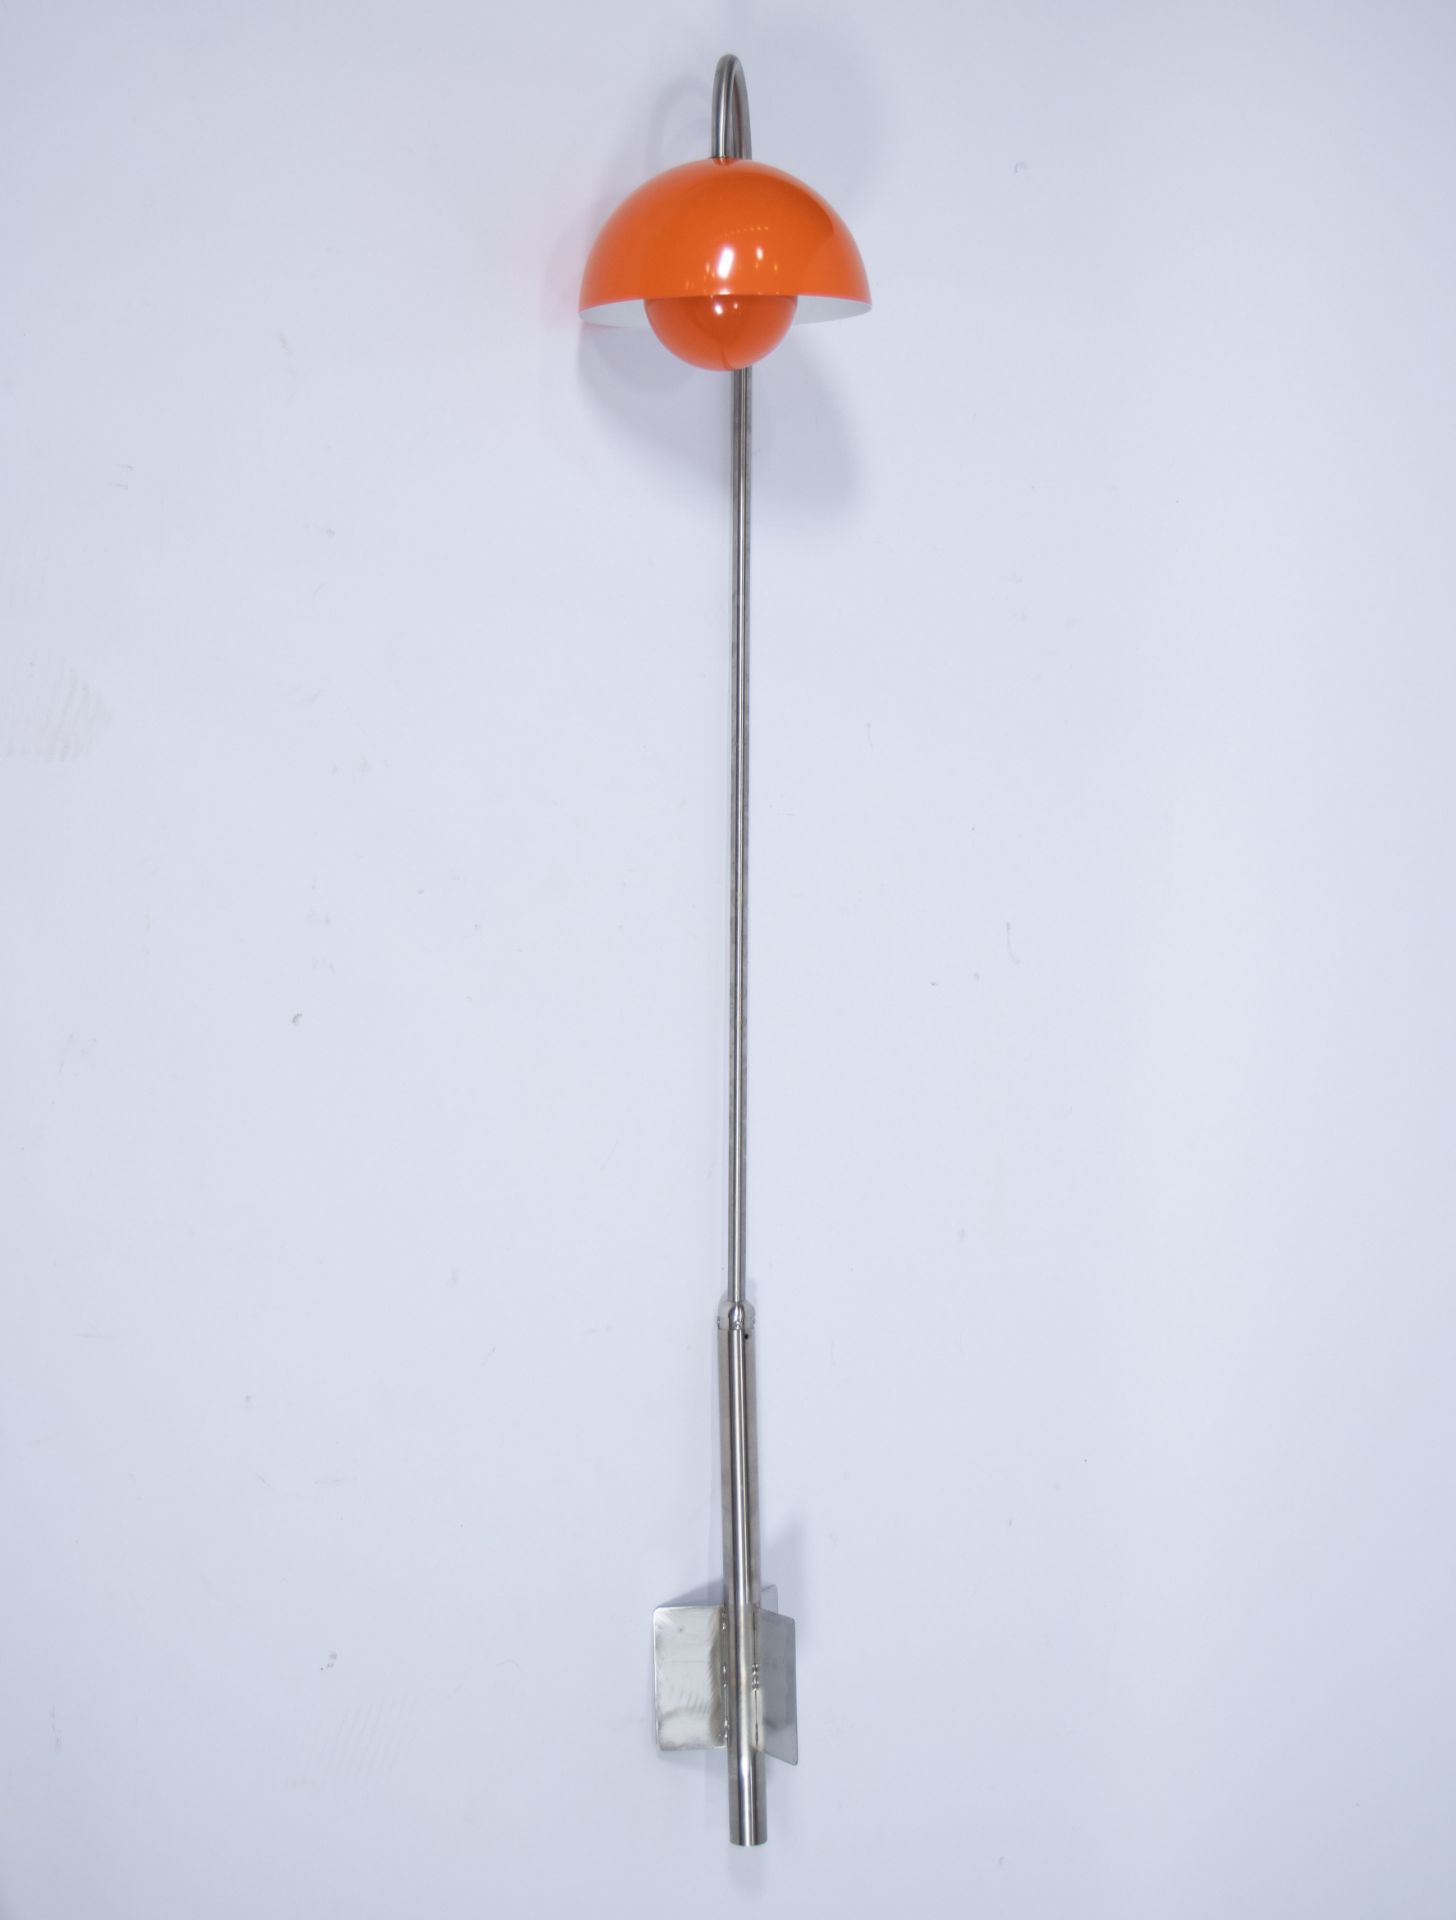 Orange flowerpot gardenlamp VP5 Design Verner Panton 1969, with originale box